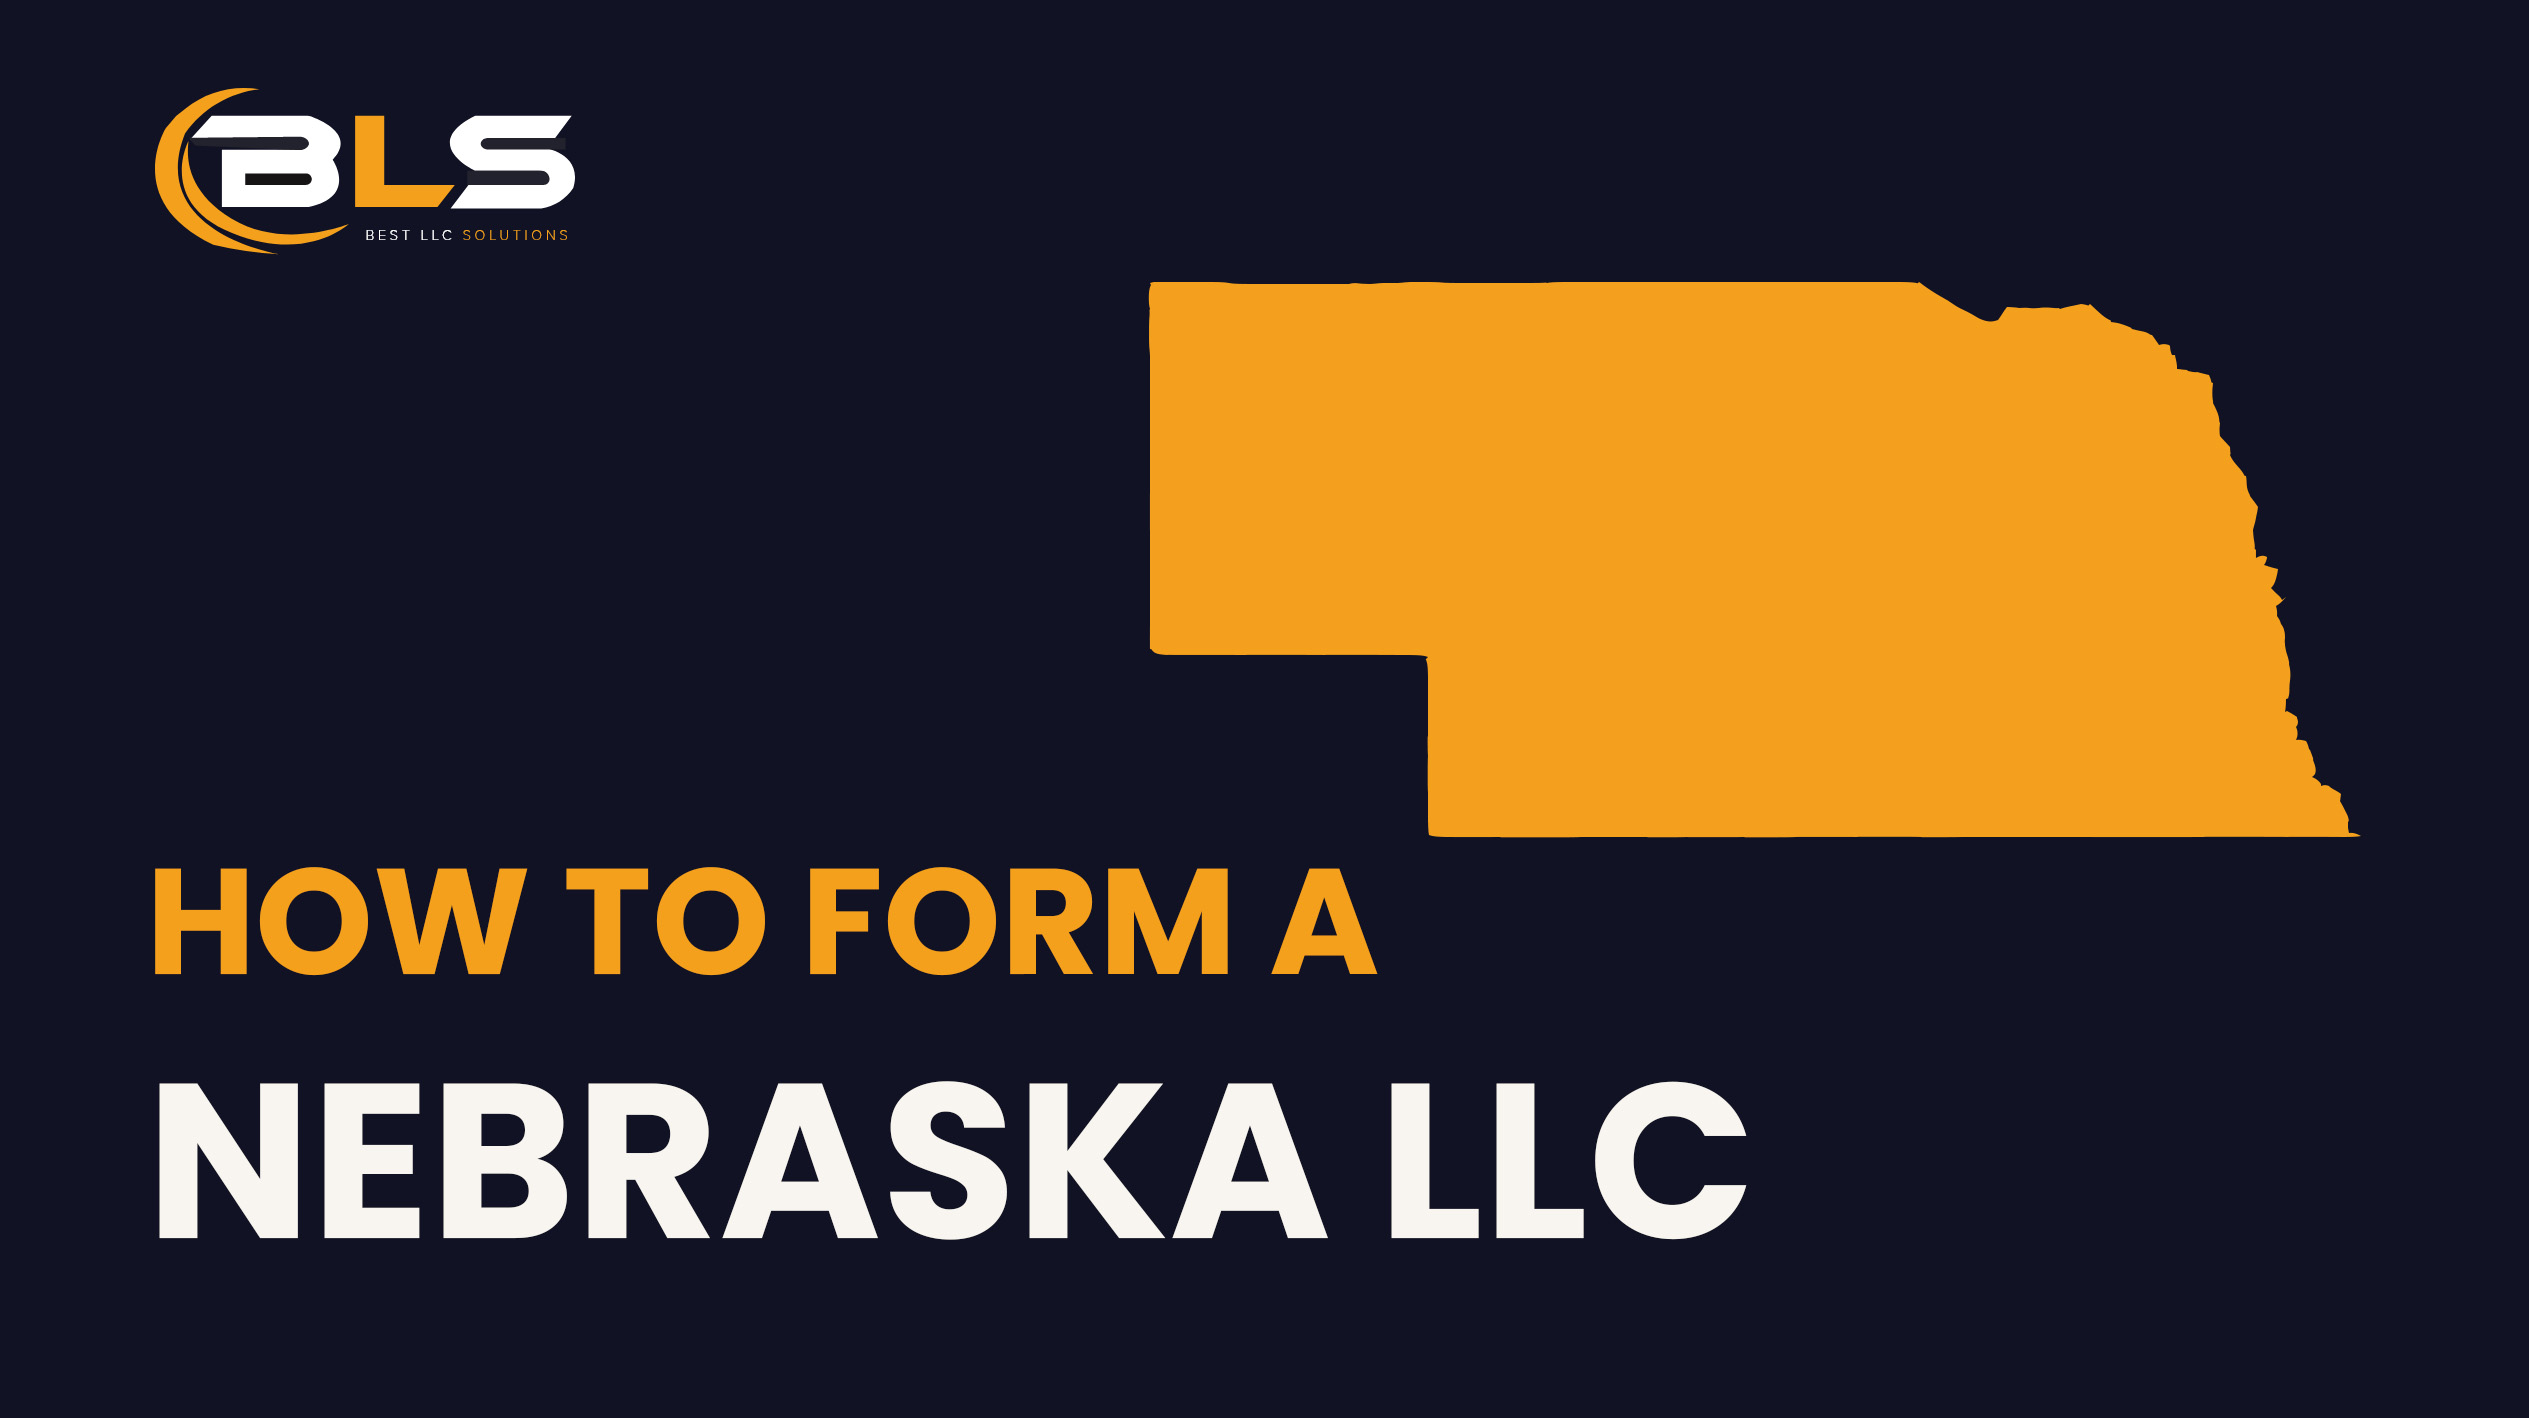 Nebraska LLC